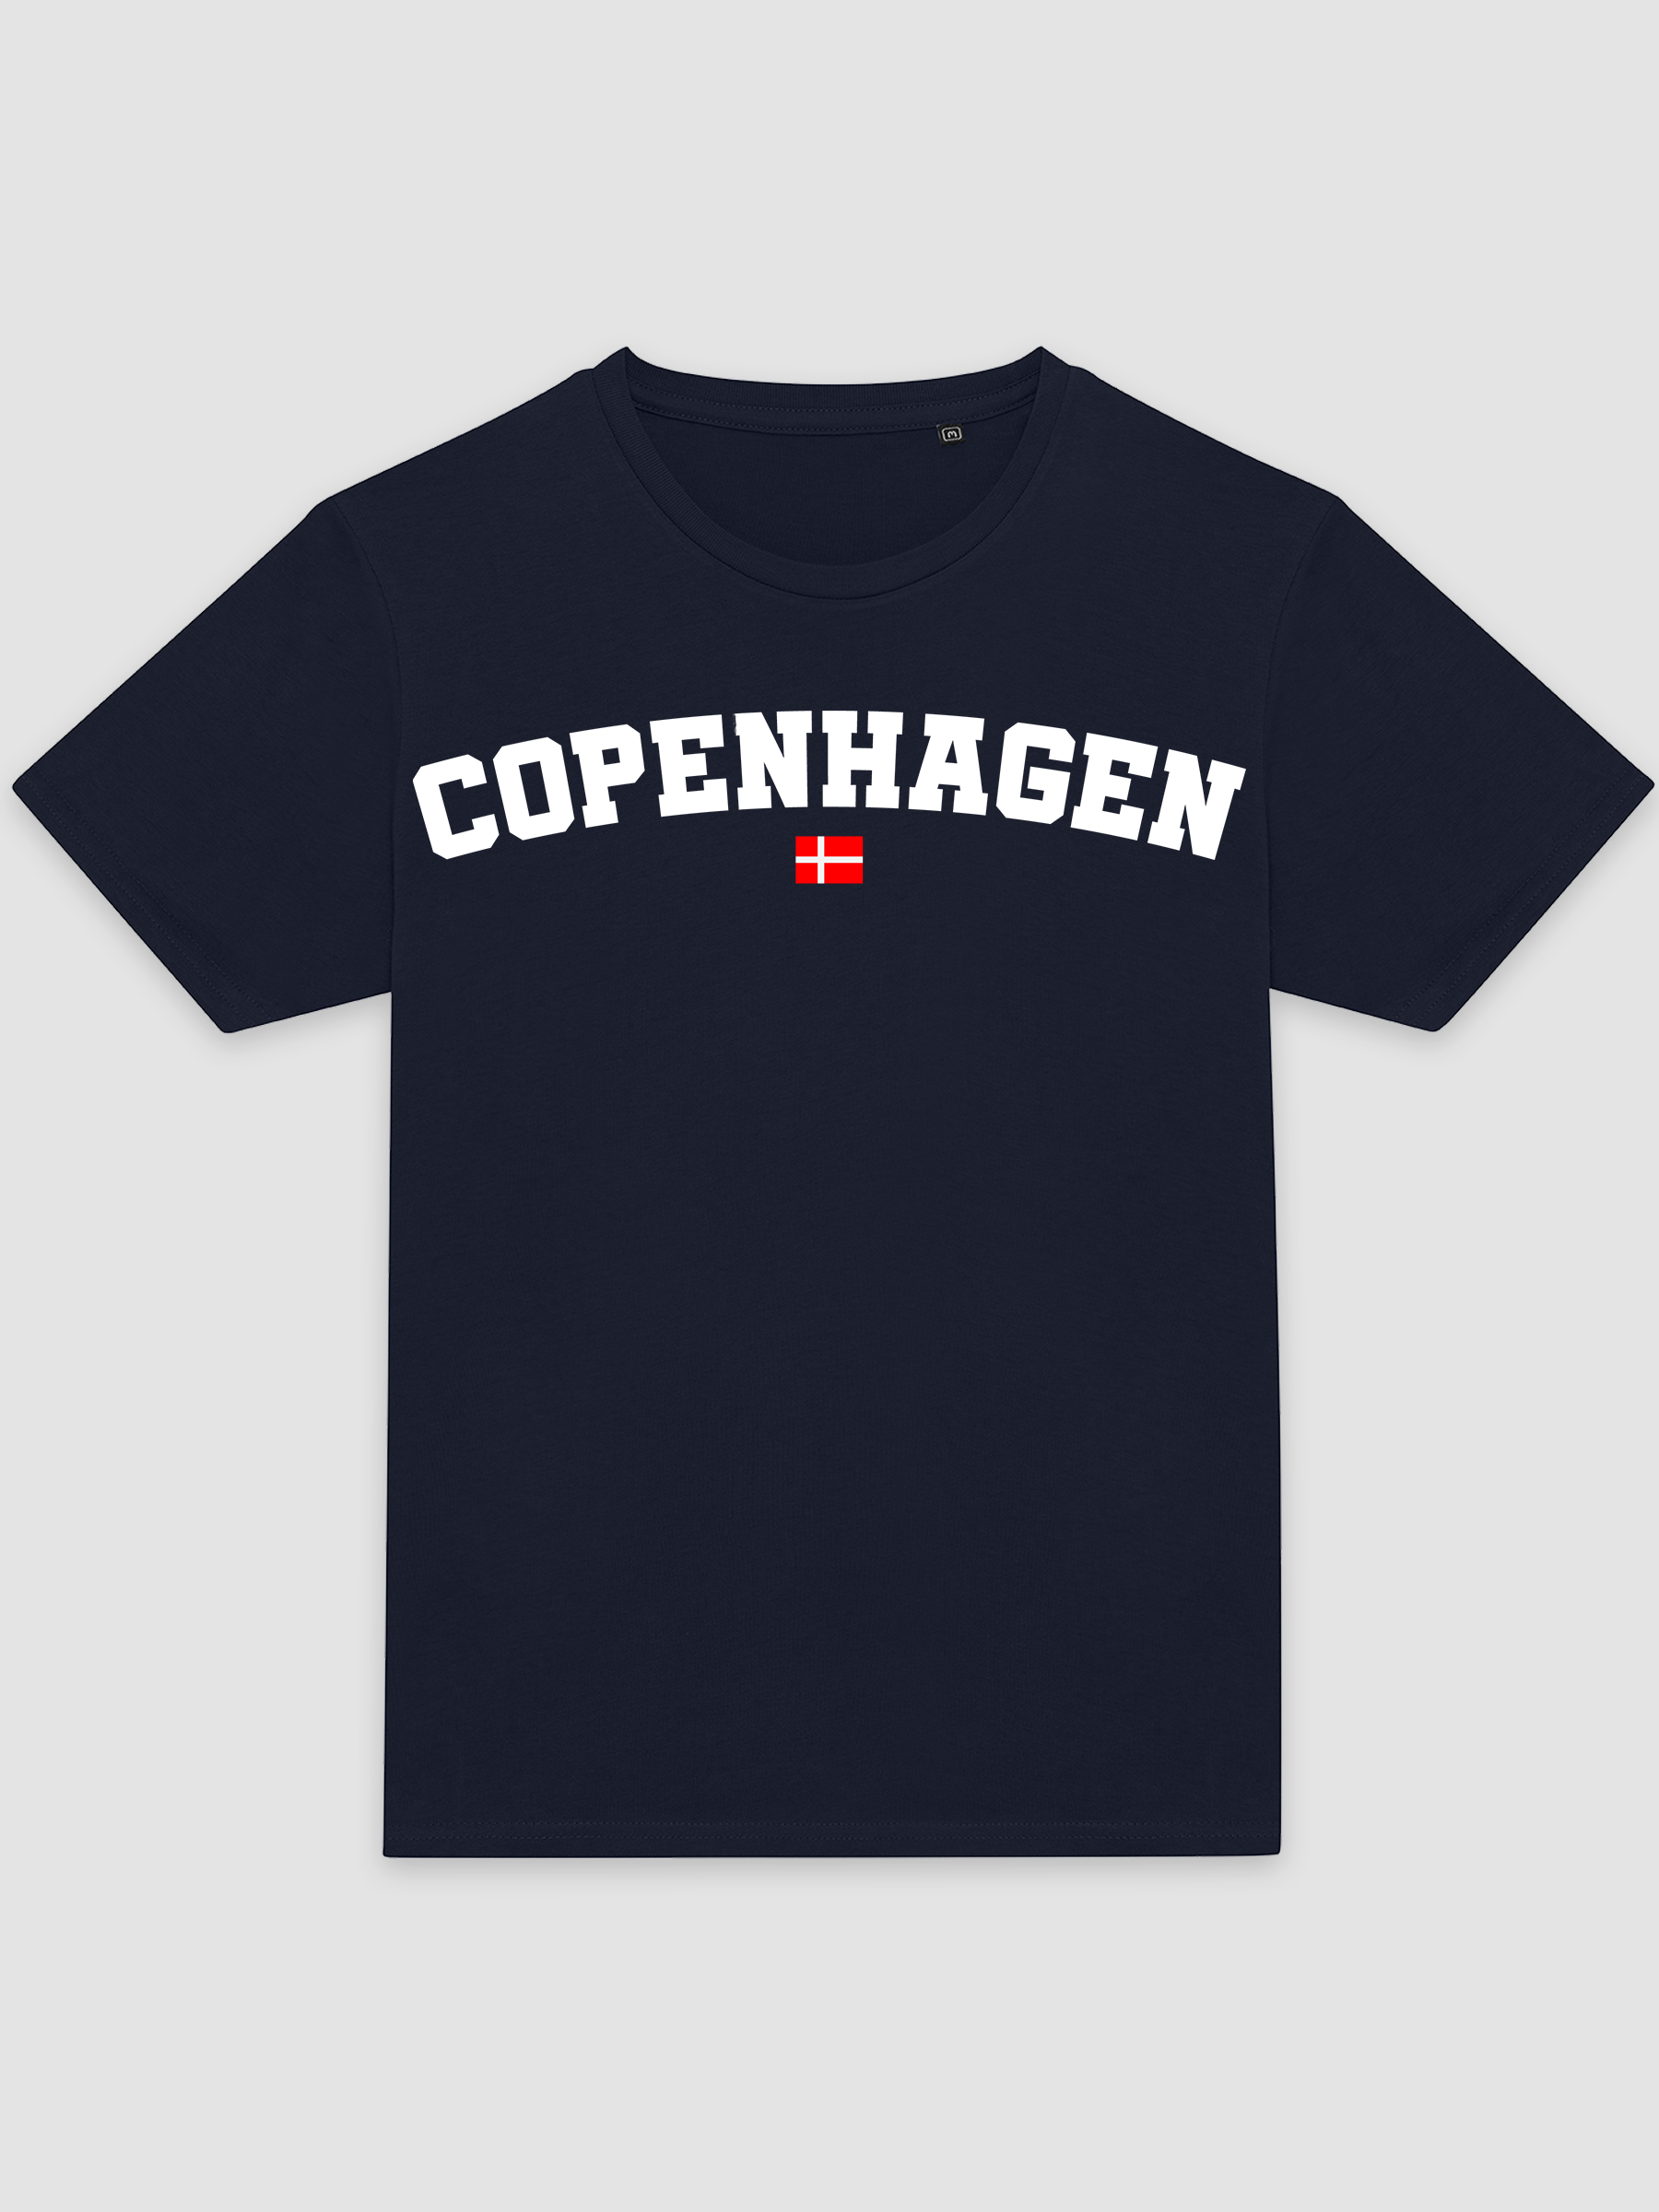 Copenhagen - Navy T-Shirt